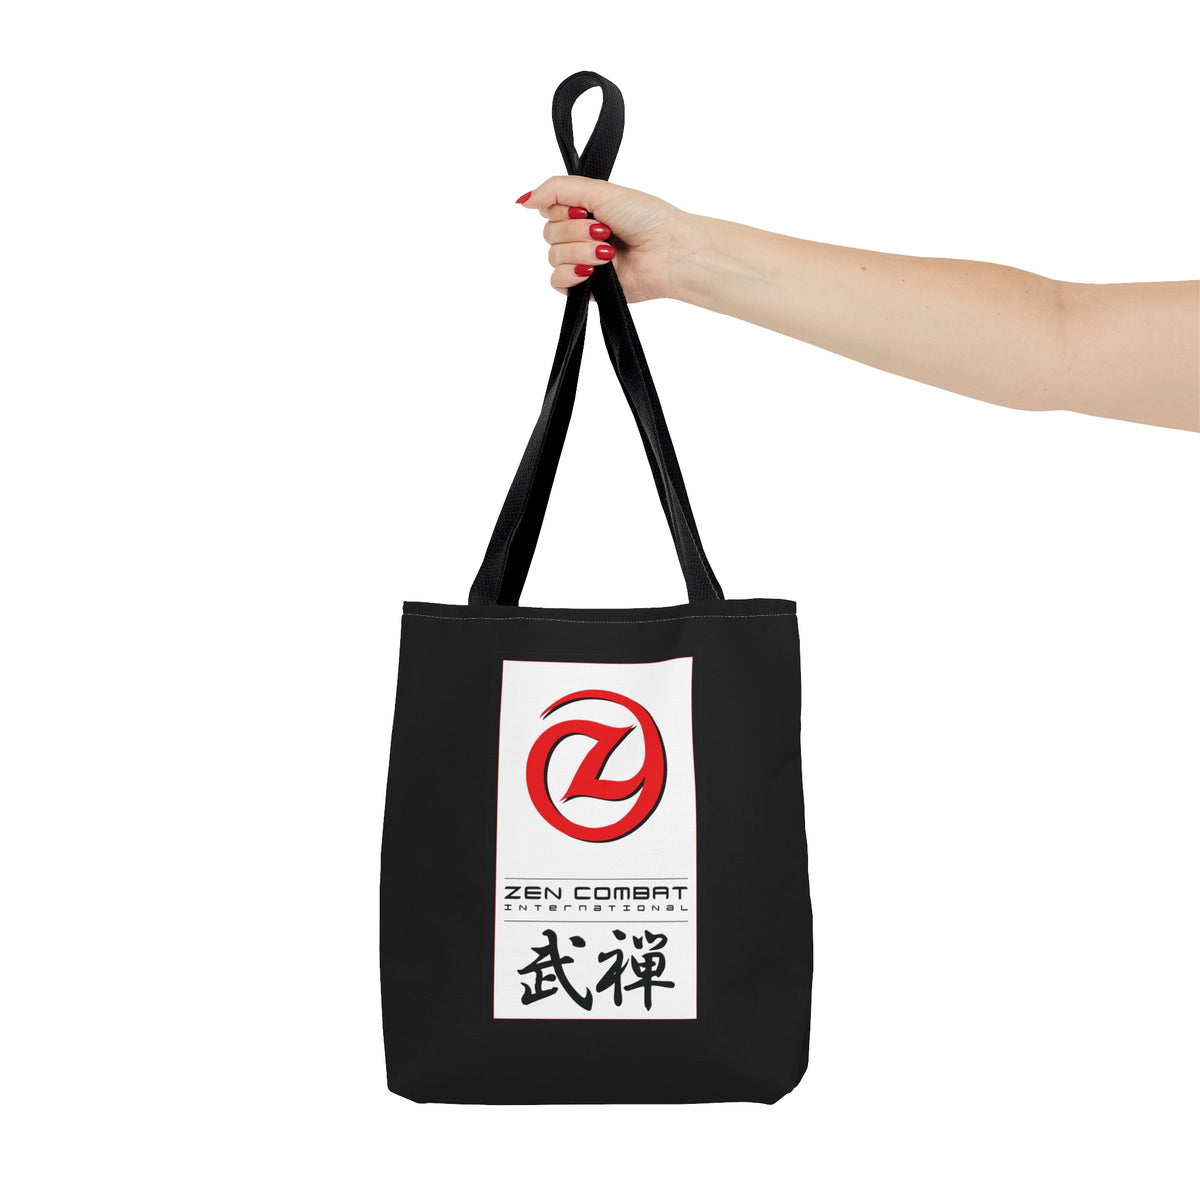 Zen Combat Tote Bag - Black